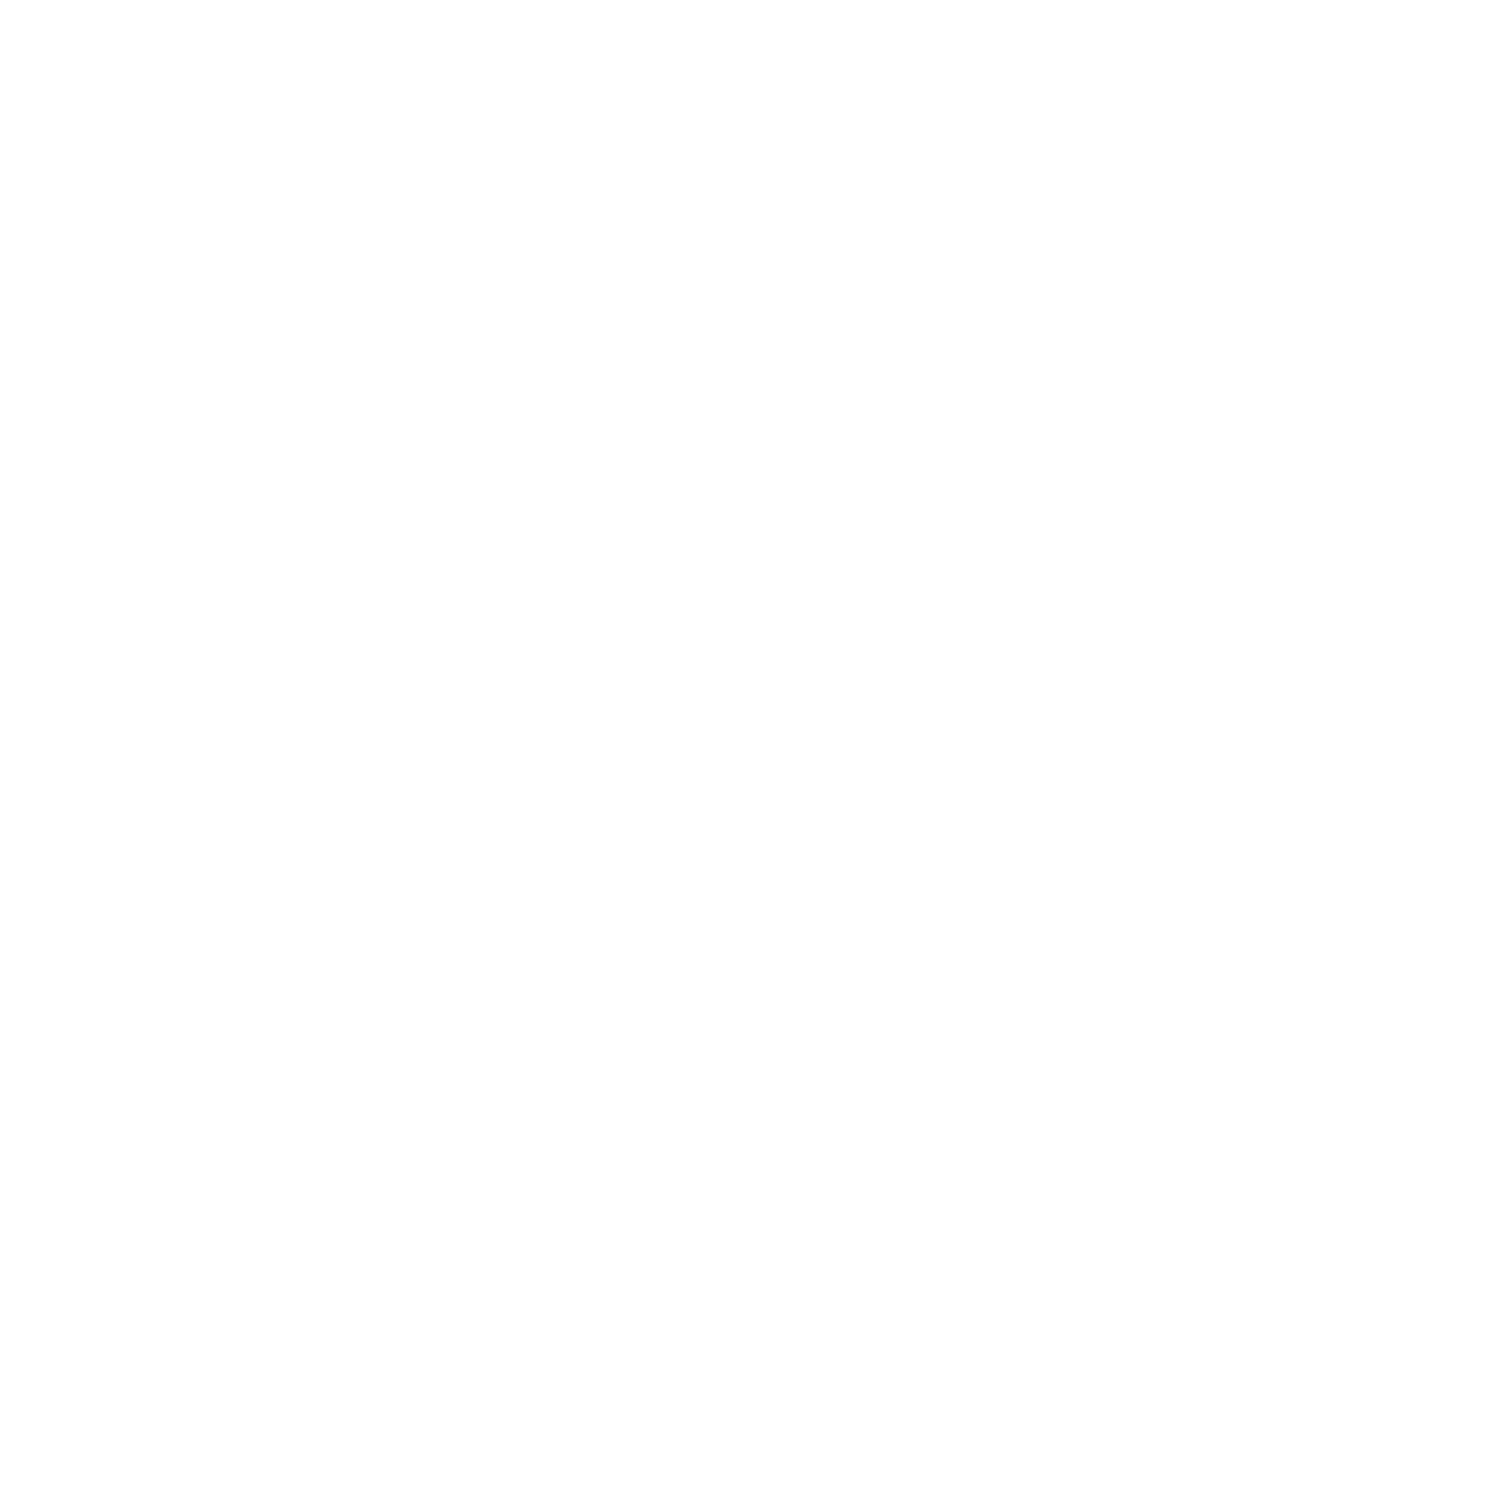 9b eventroom